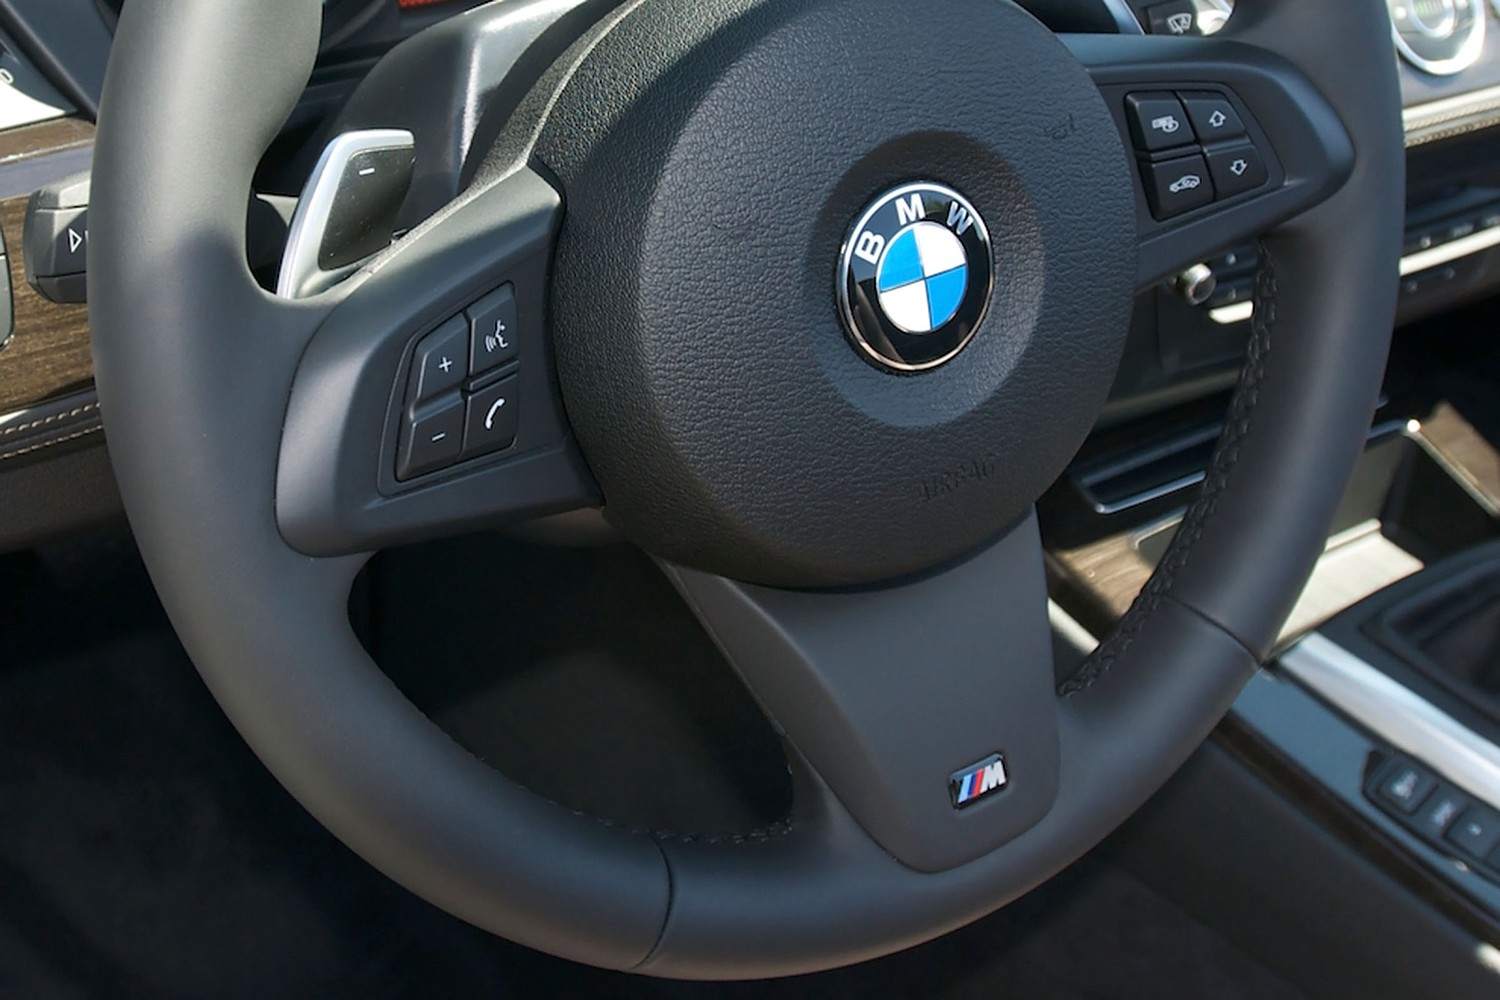 BMW Z4 sDrive28i Convertible Steering Wheel Detail (2012 model year shown)